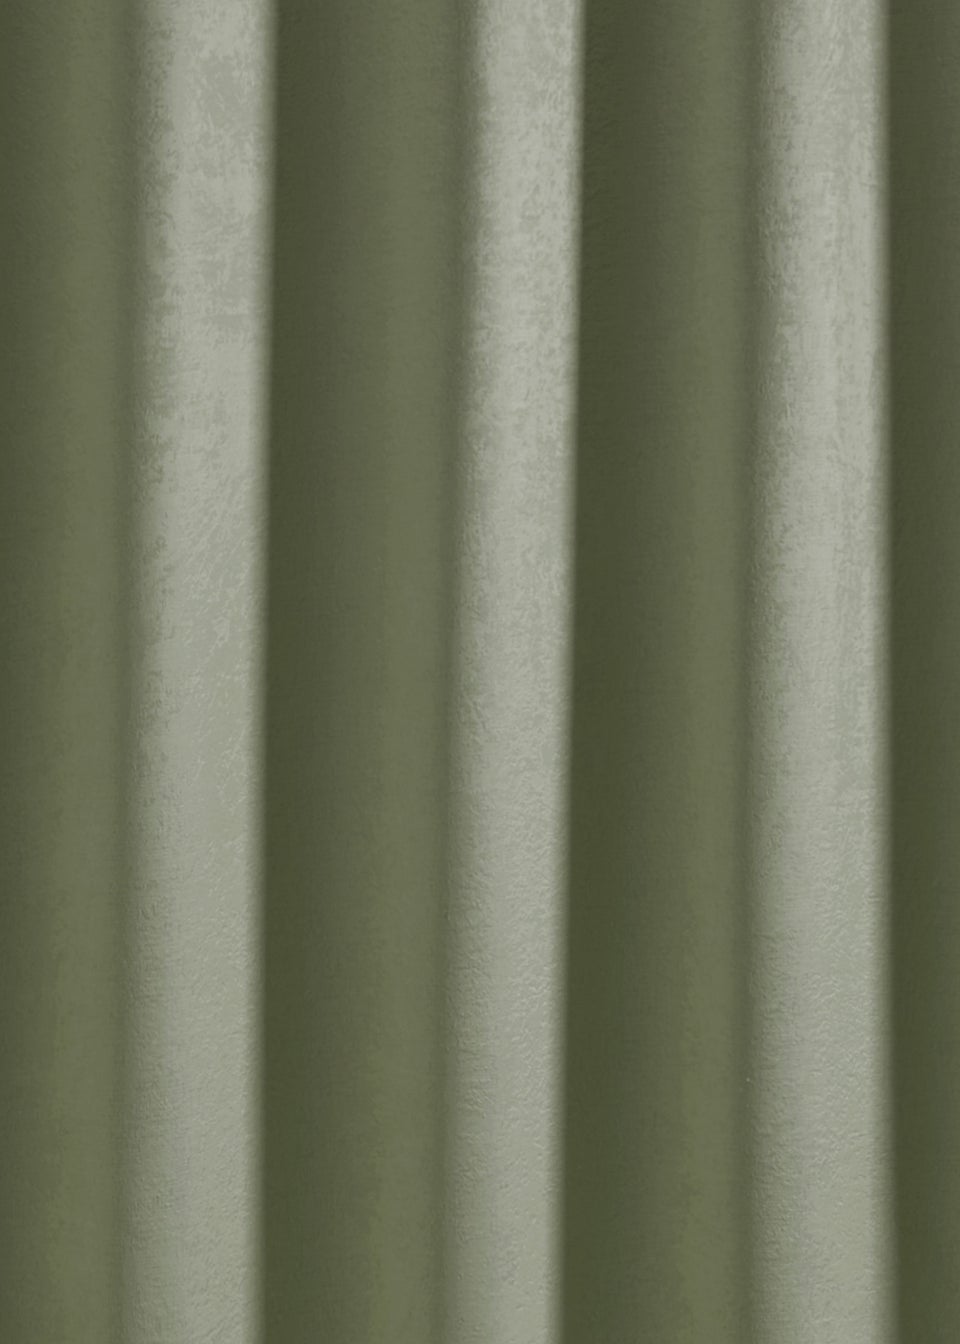 Fusion Strata Eyelet Single Panel Door Curtain